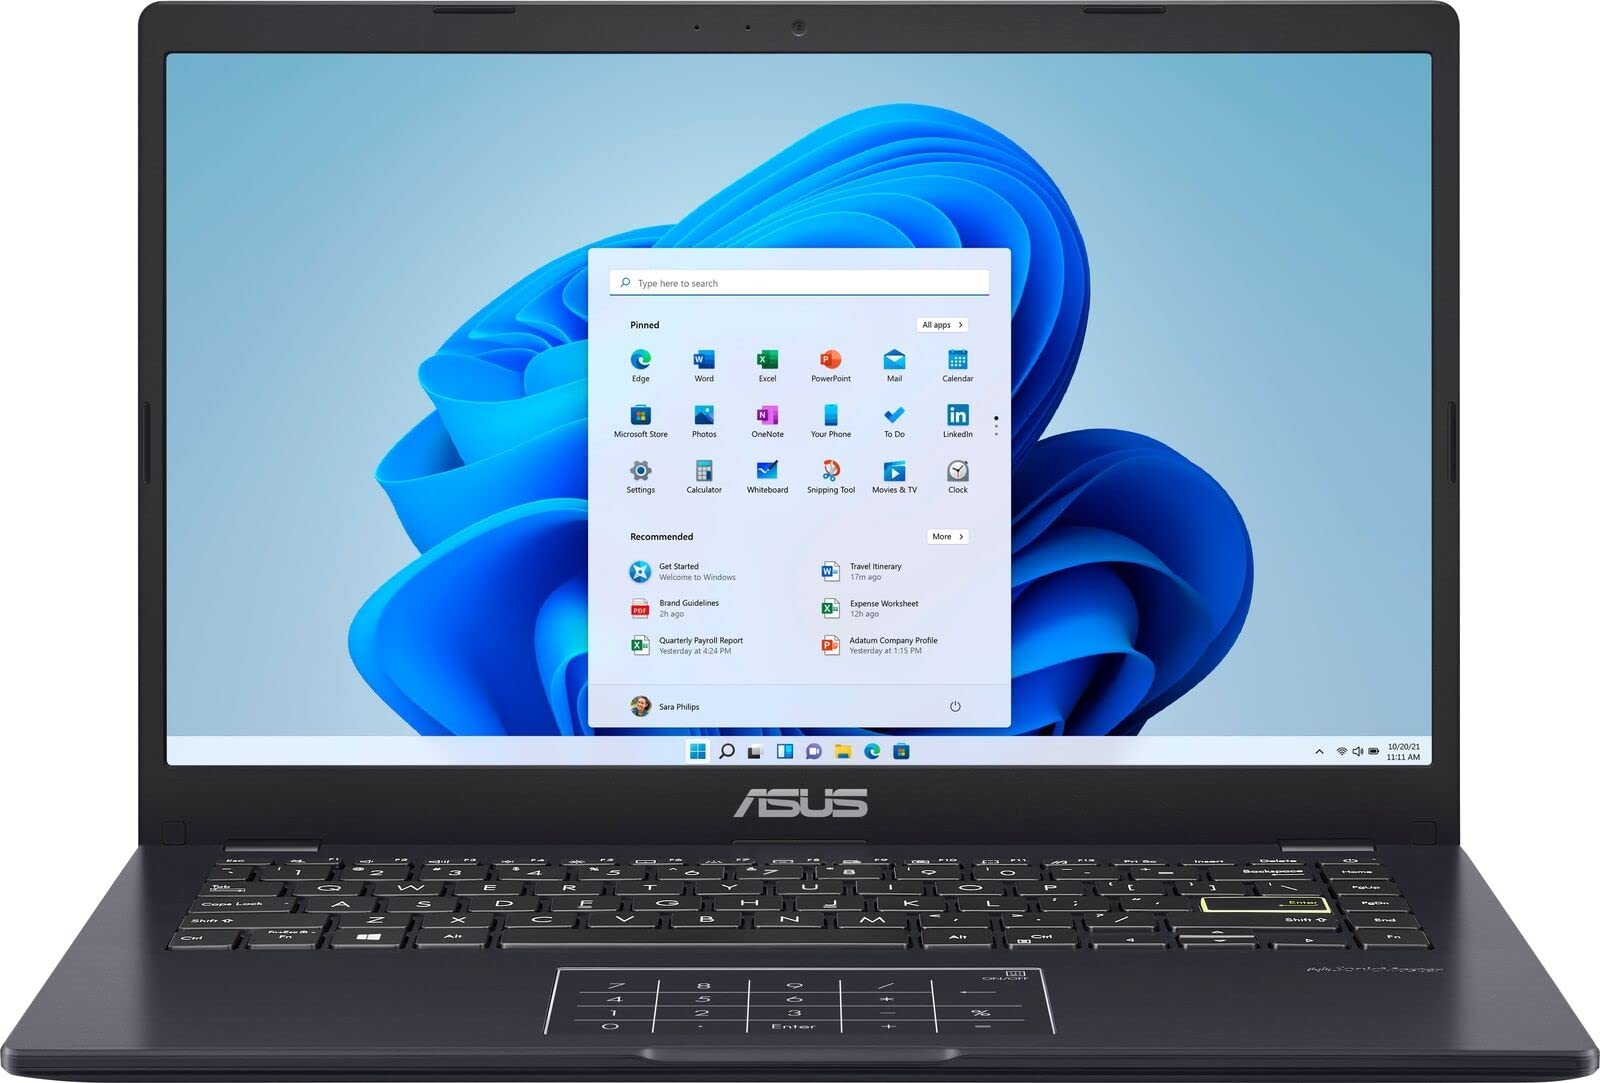 ASUS E410MA 14" Laptop Computer Intel Celeron N4020 1.1GHz Processor; 4GB DDR4 Onboard RAM; 64GB eMMC Storage; Intel UHD Graphics 600  - Like New